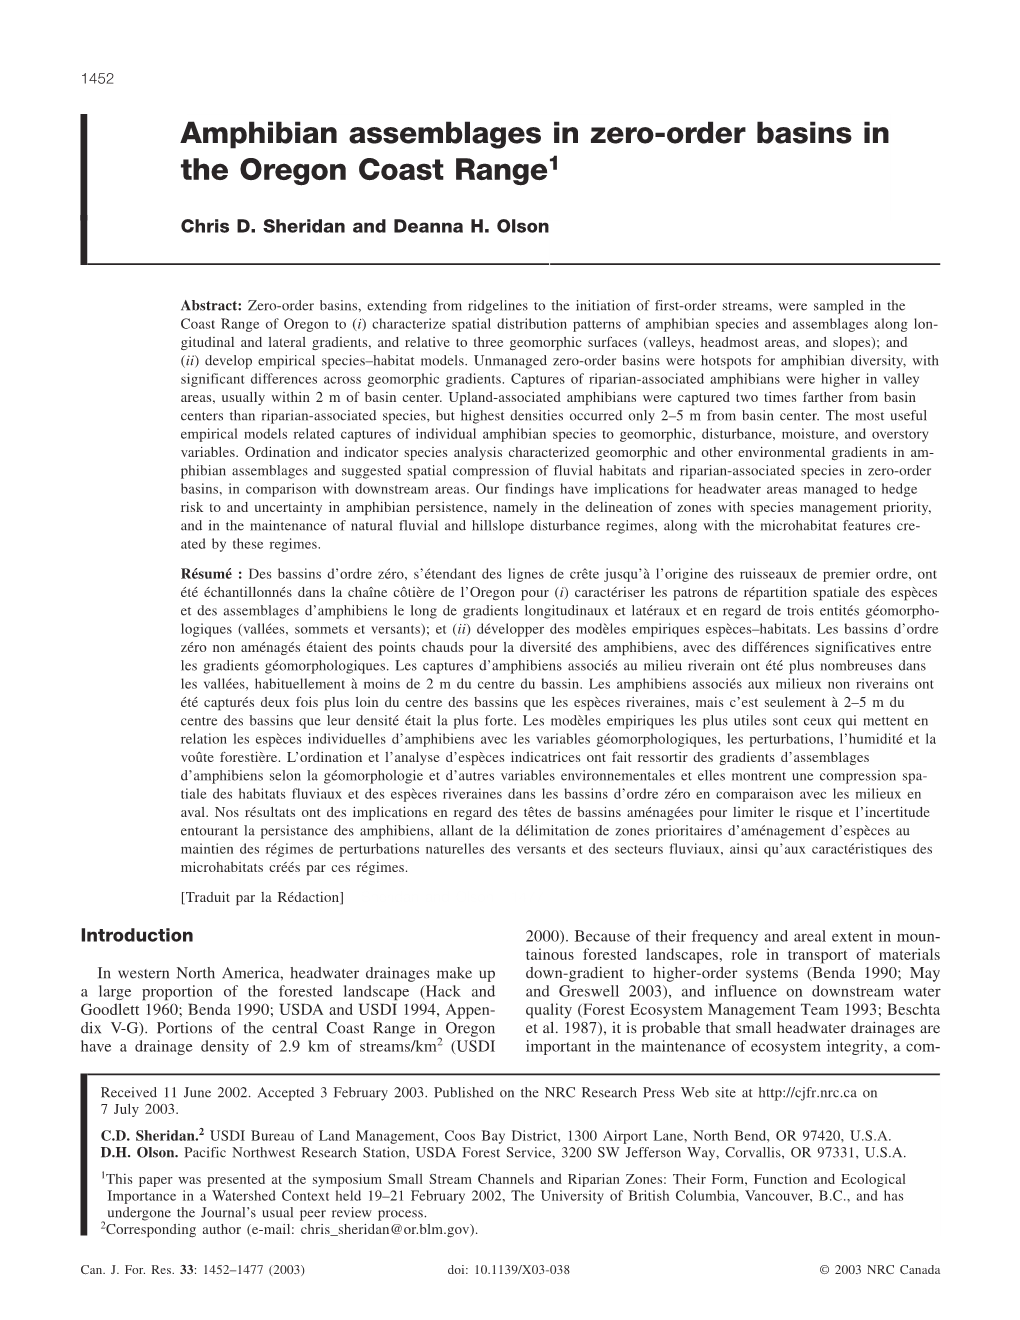 Amphibian Assemblages in Zero-Order Basins in the Oregon Coast Range1